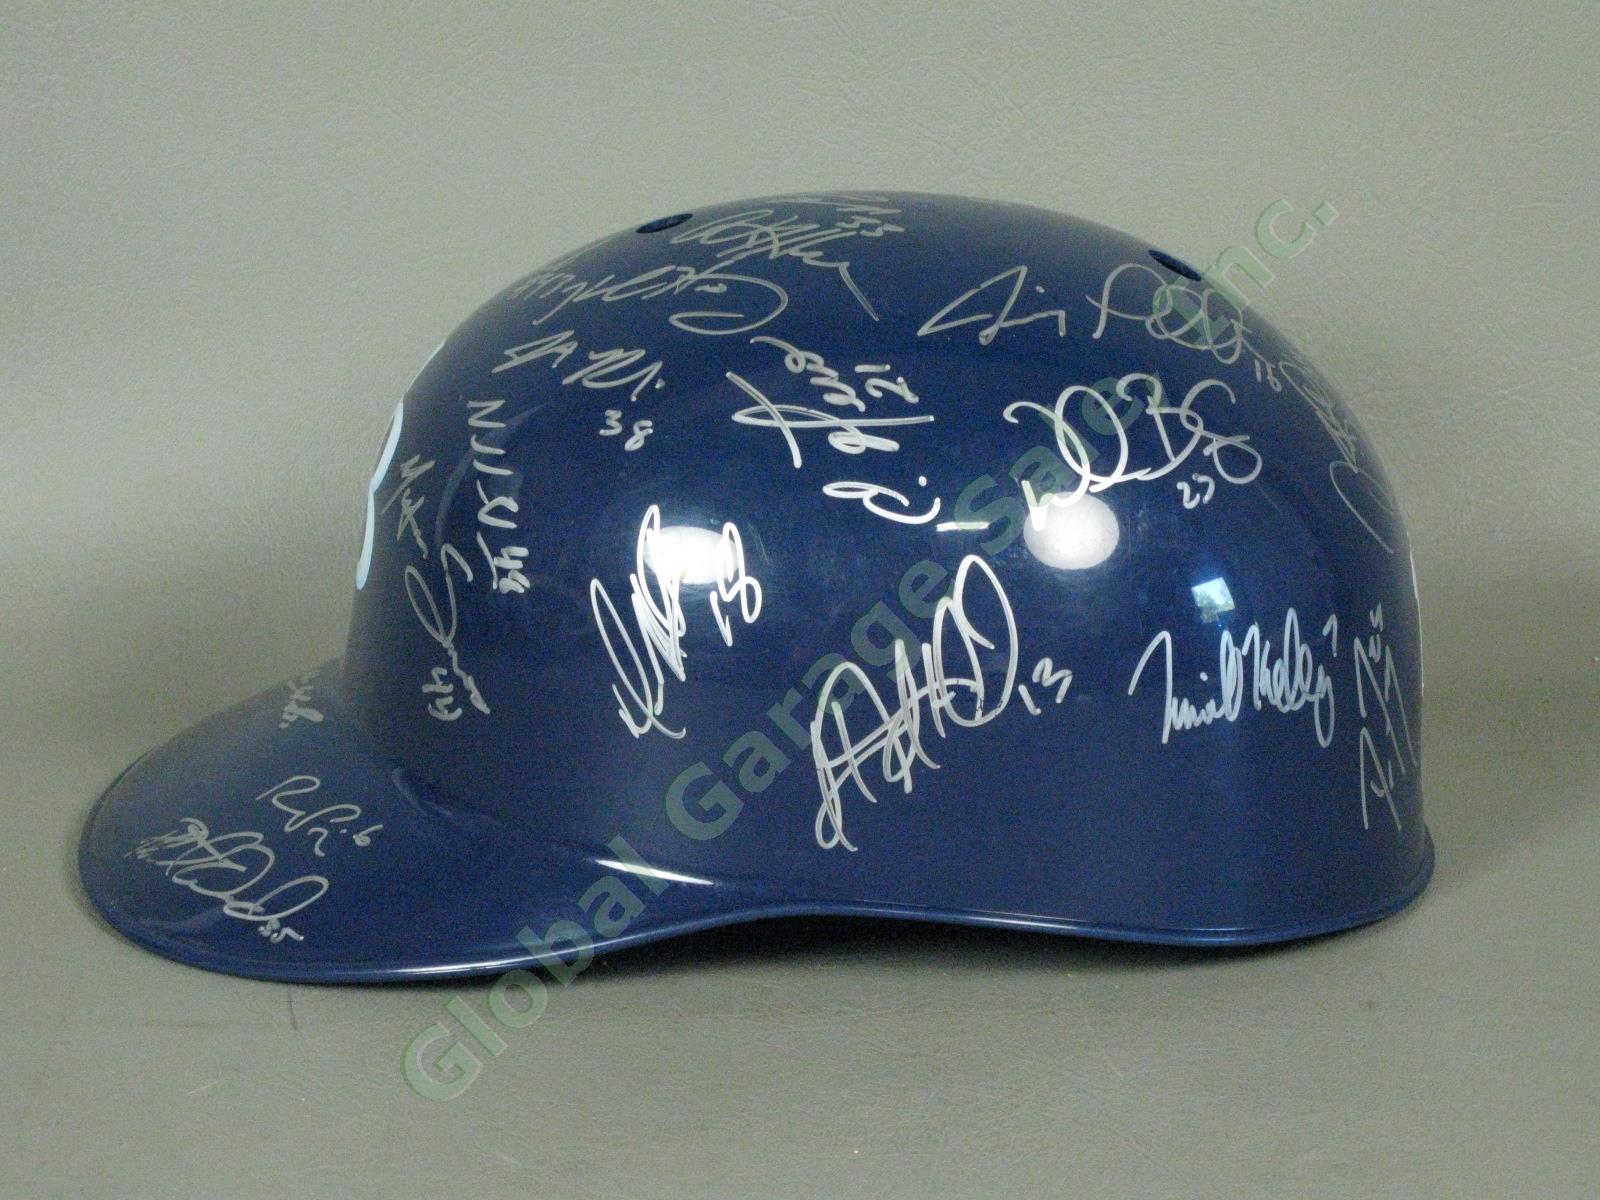 2010 Hudson Valley Renegades Team Signed Baseball Helmet NYPL Tampa Bay Rays NR 3